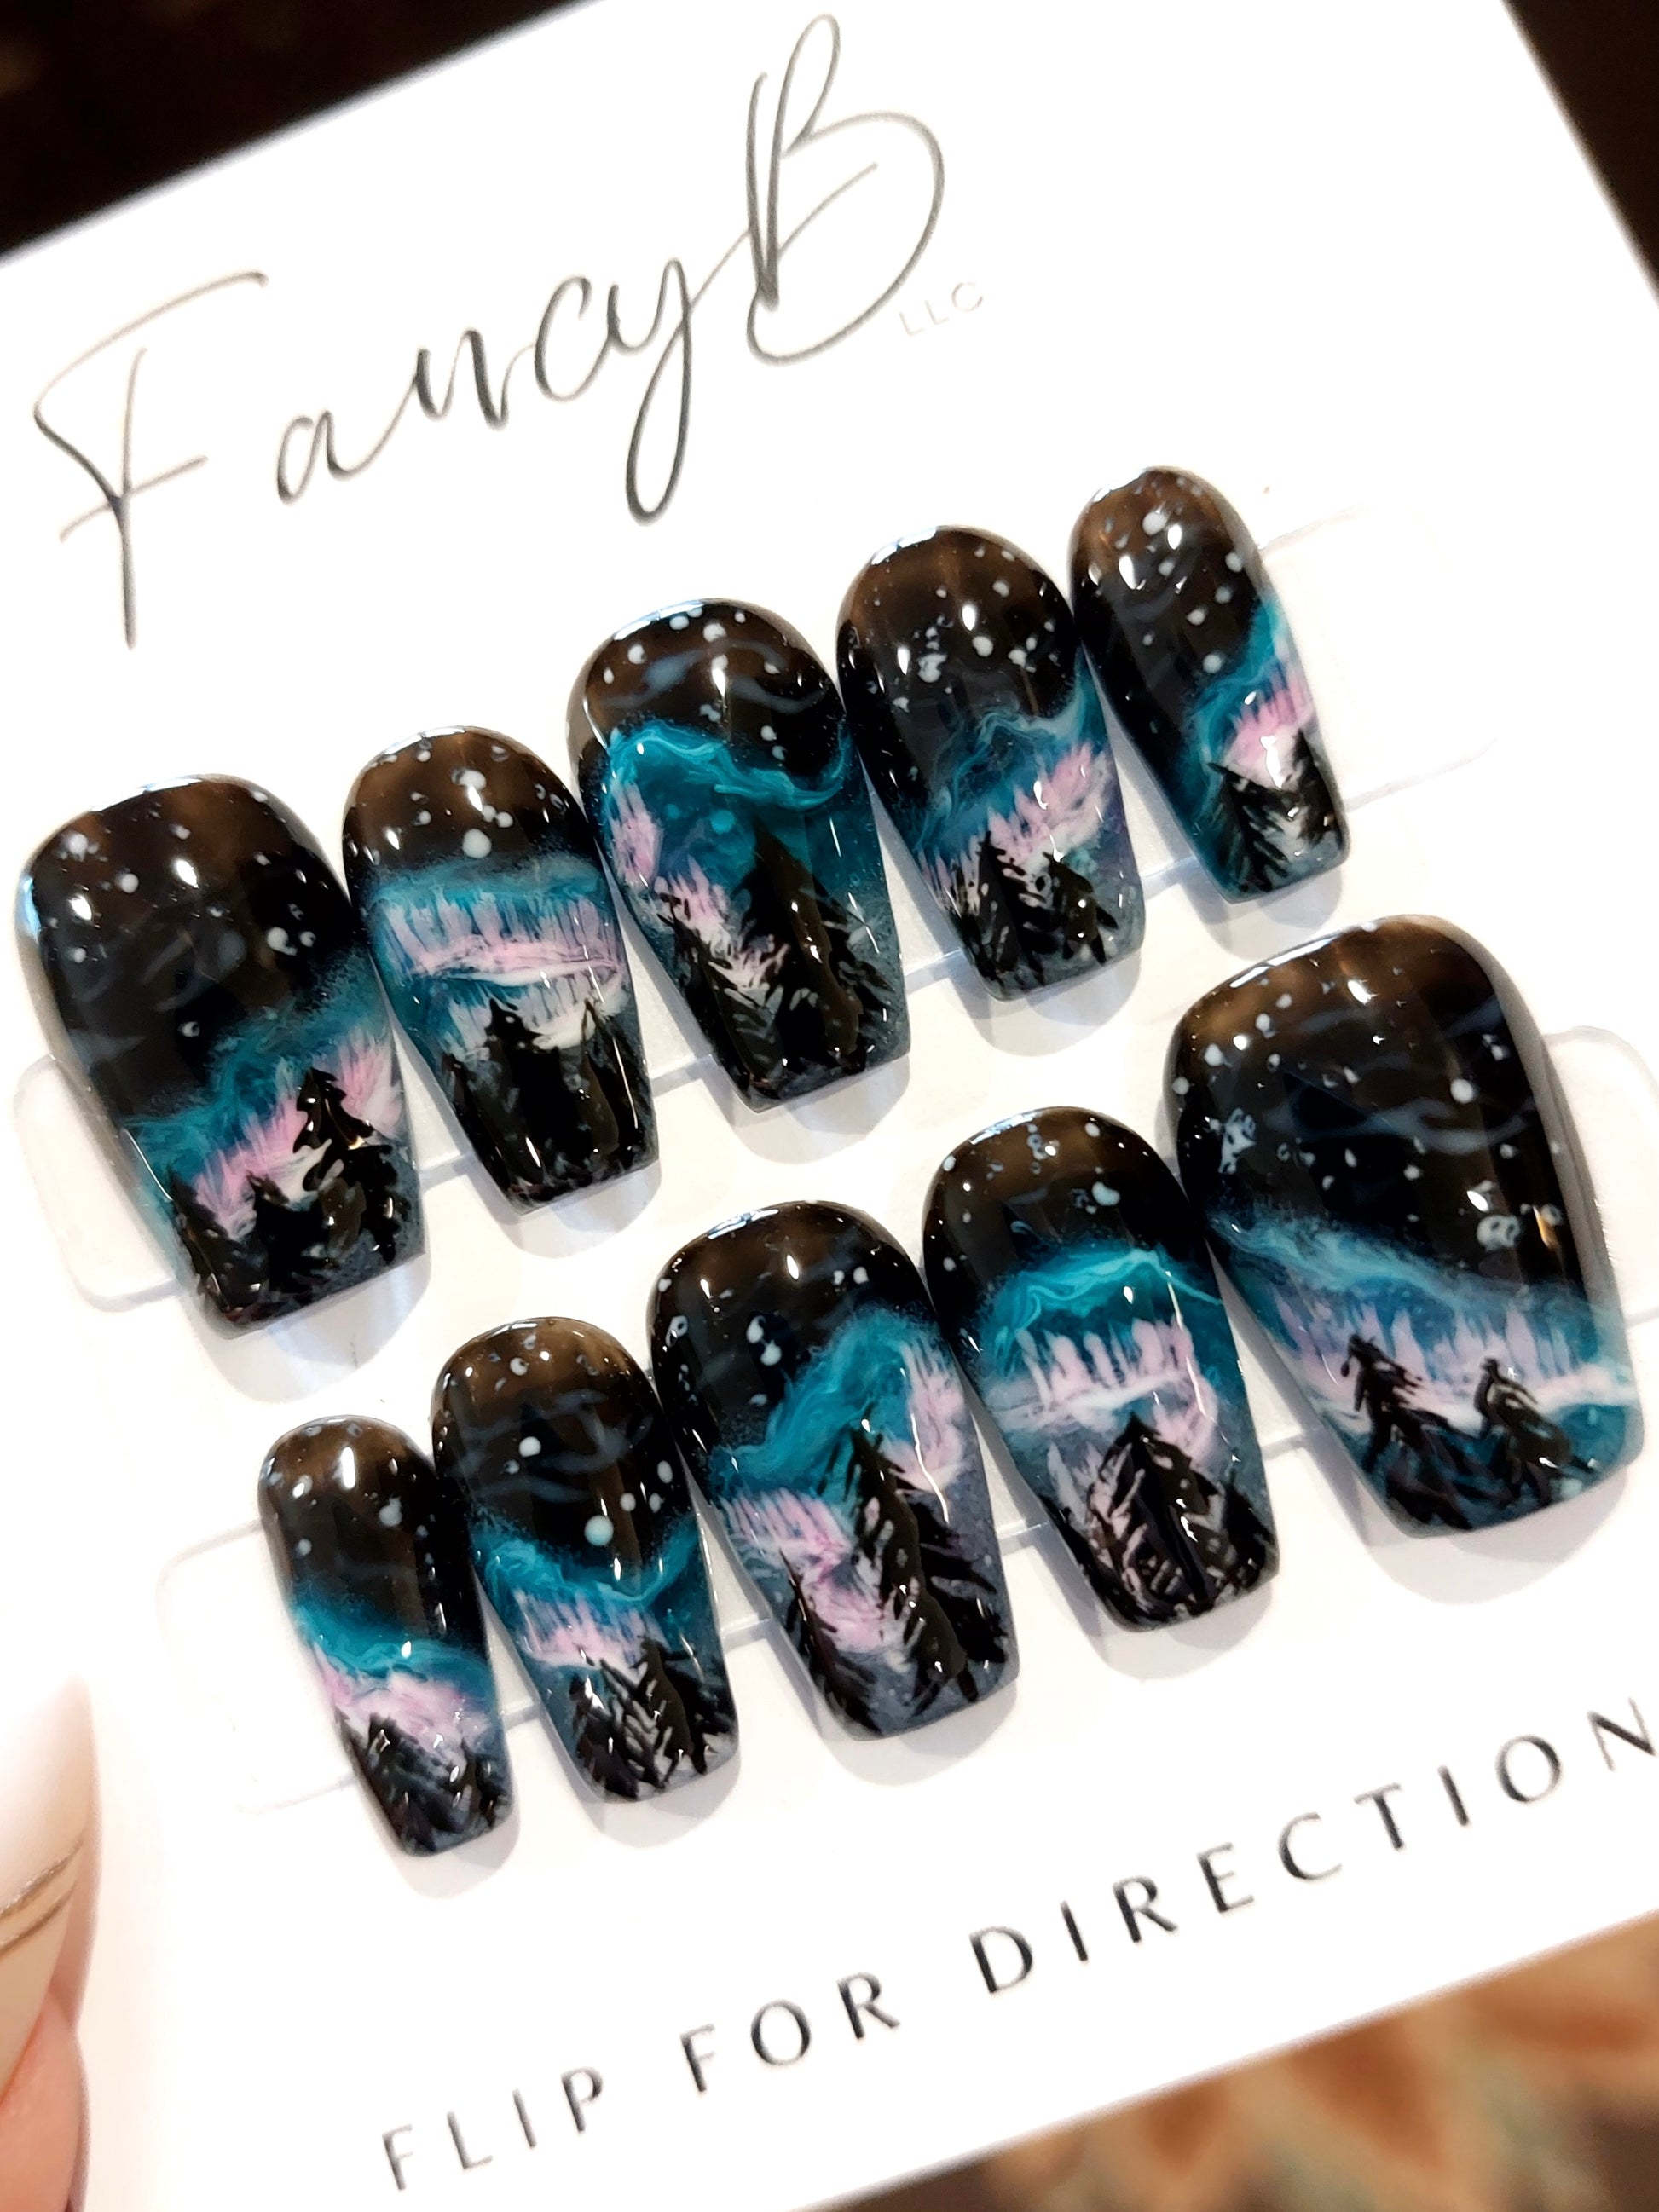 Custom press on nails, hand painted northern lights aurora borealis, galaxy starry night nails, short coffin. FancyB nails.